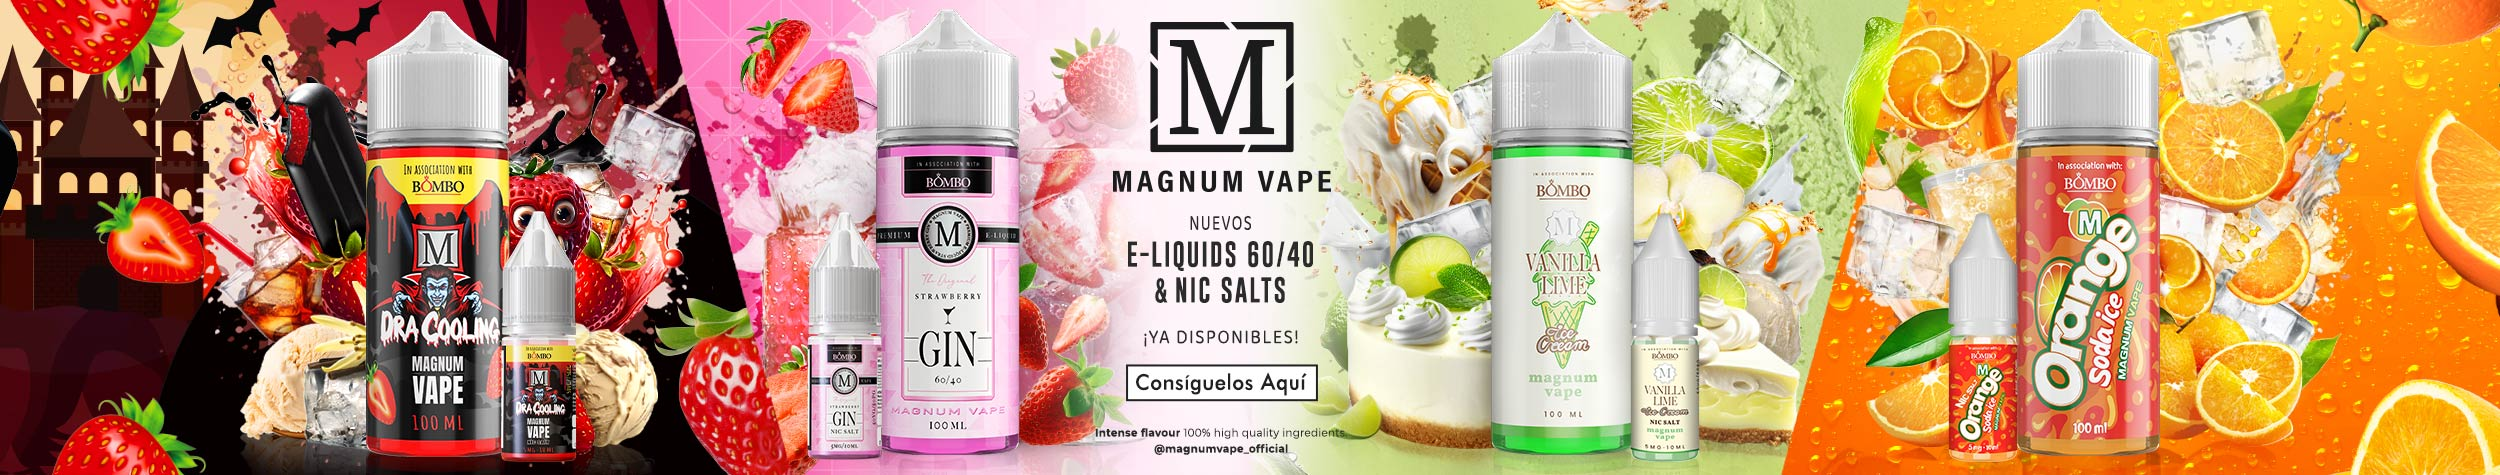 Nuevos E-liquid 60/40 & Nic Salts Magnum Vape